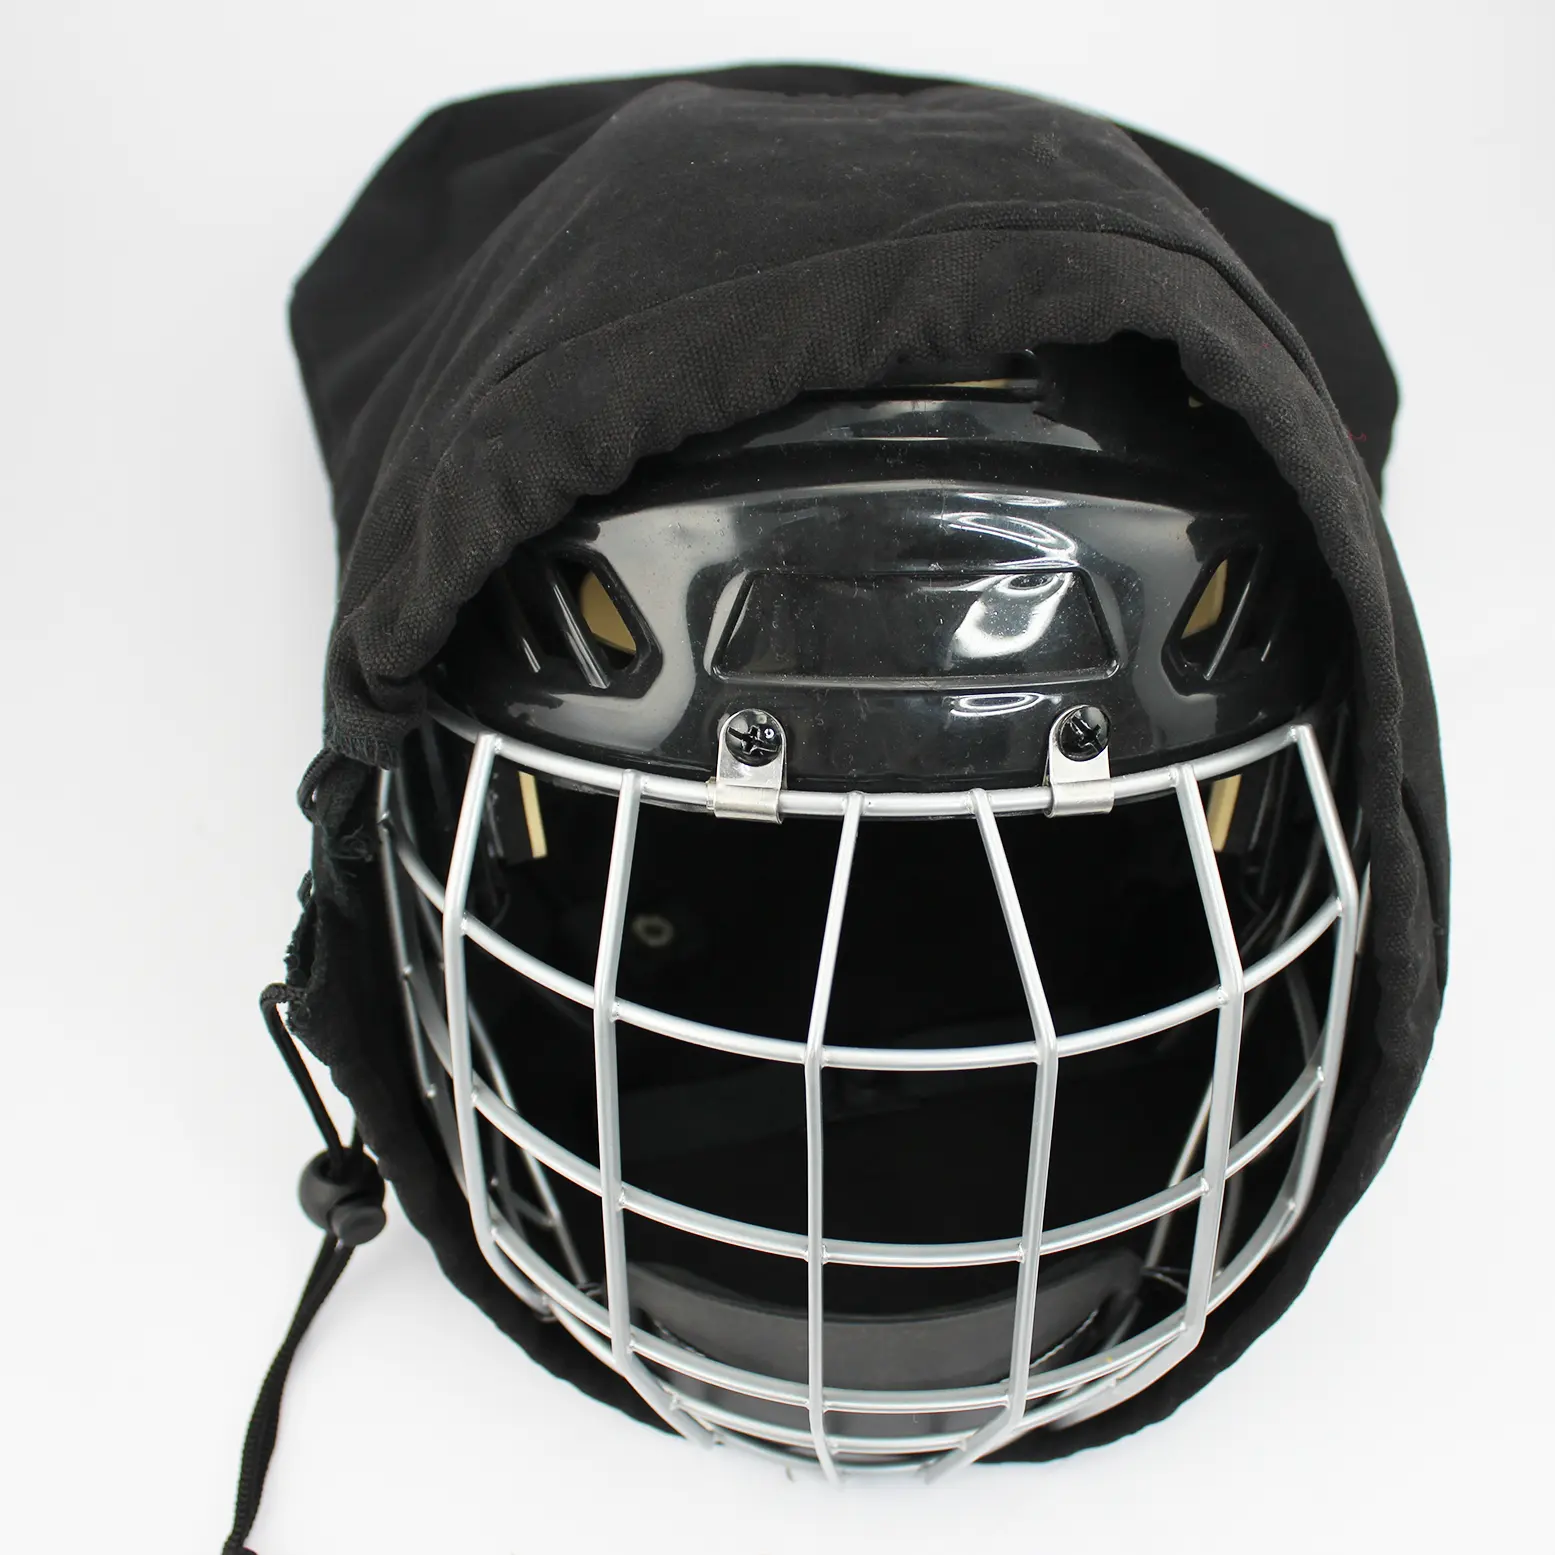 Kit de reparo para capacete Kit de acessórios para capacete esportivo de hóquei